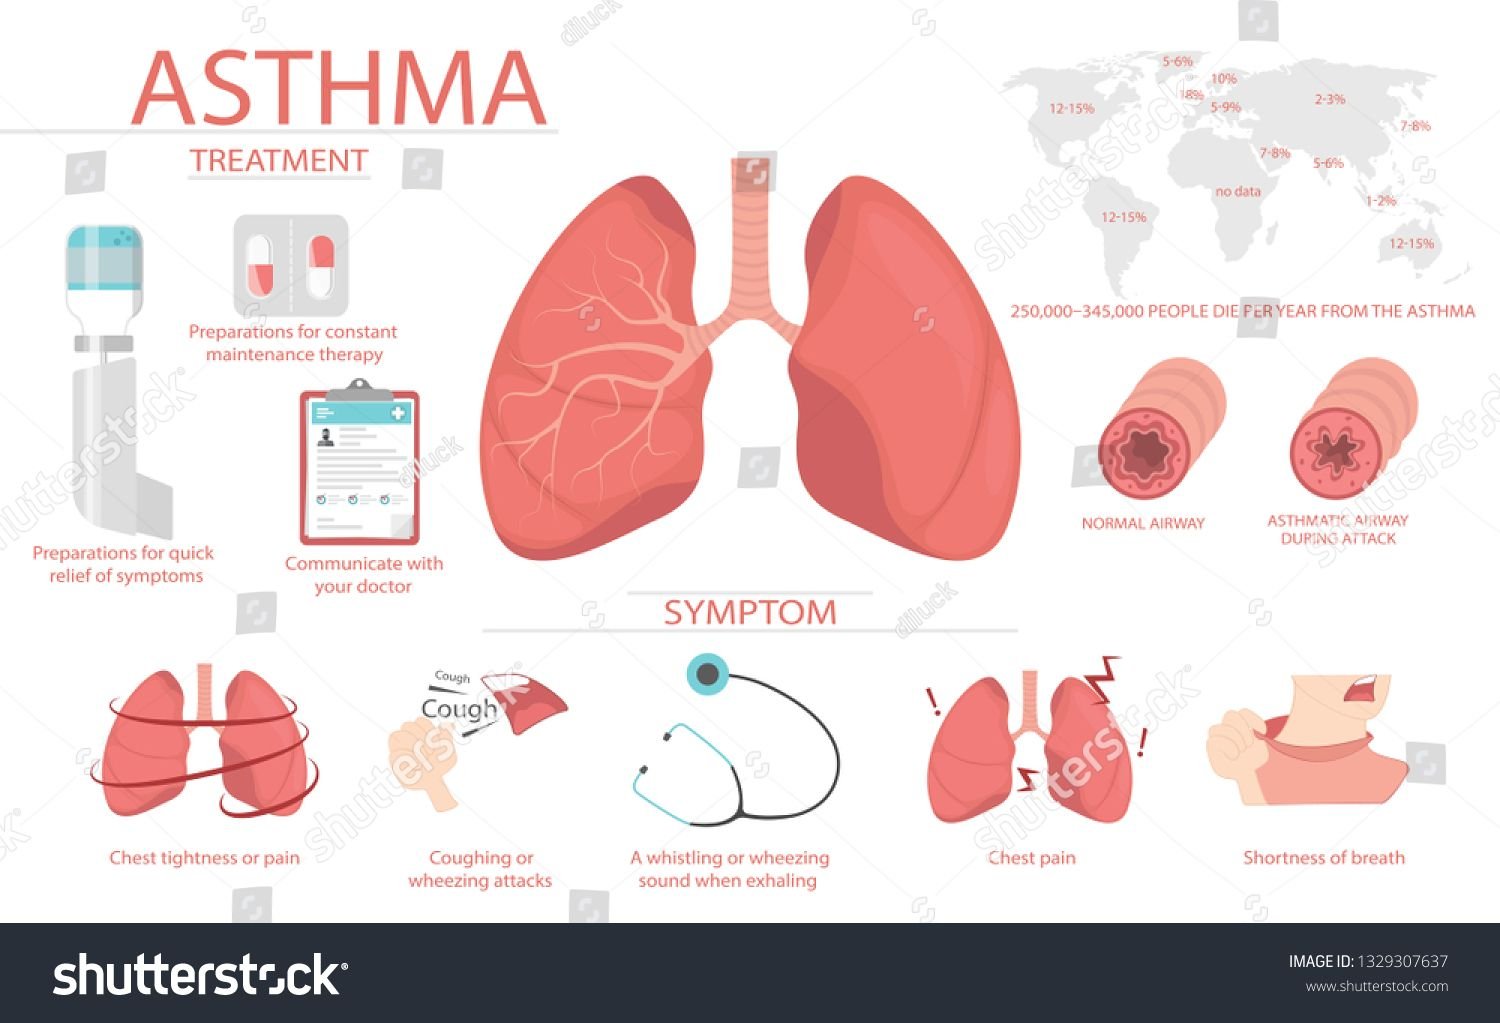 Постер астма. Инфографика бронхиальная астма. Бронхиальная астма плакат. Легкие астматика. Постер бронхиальная астма.